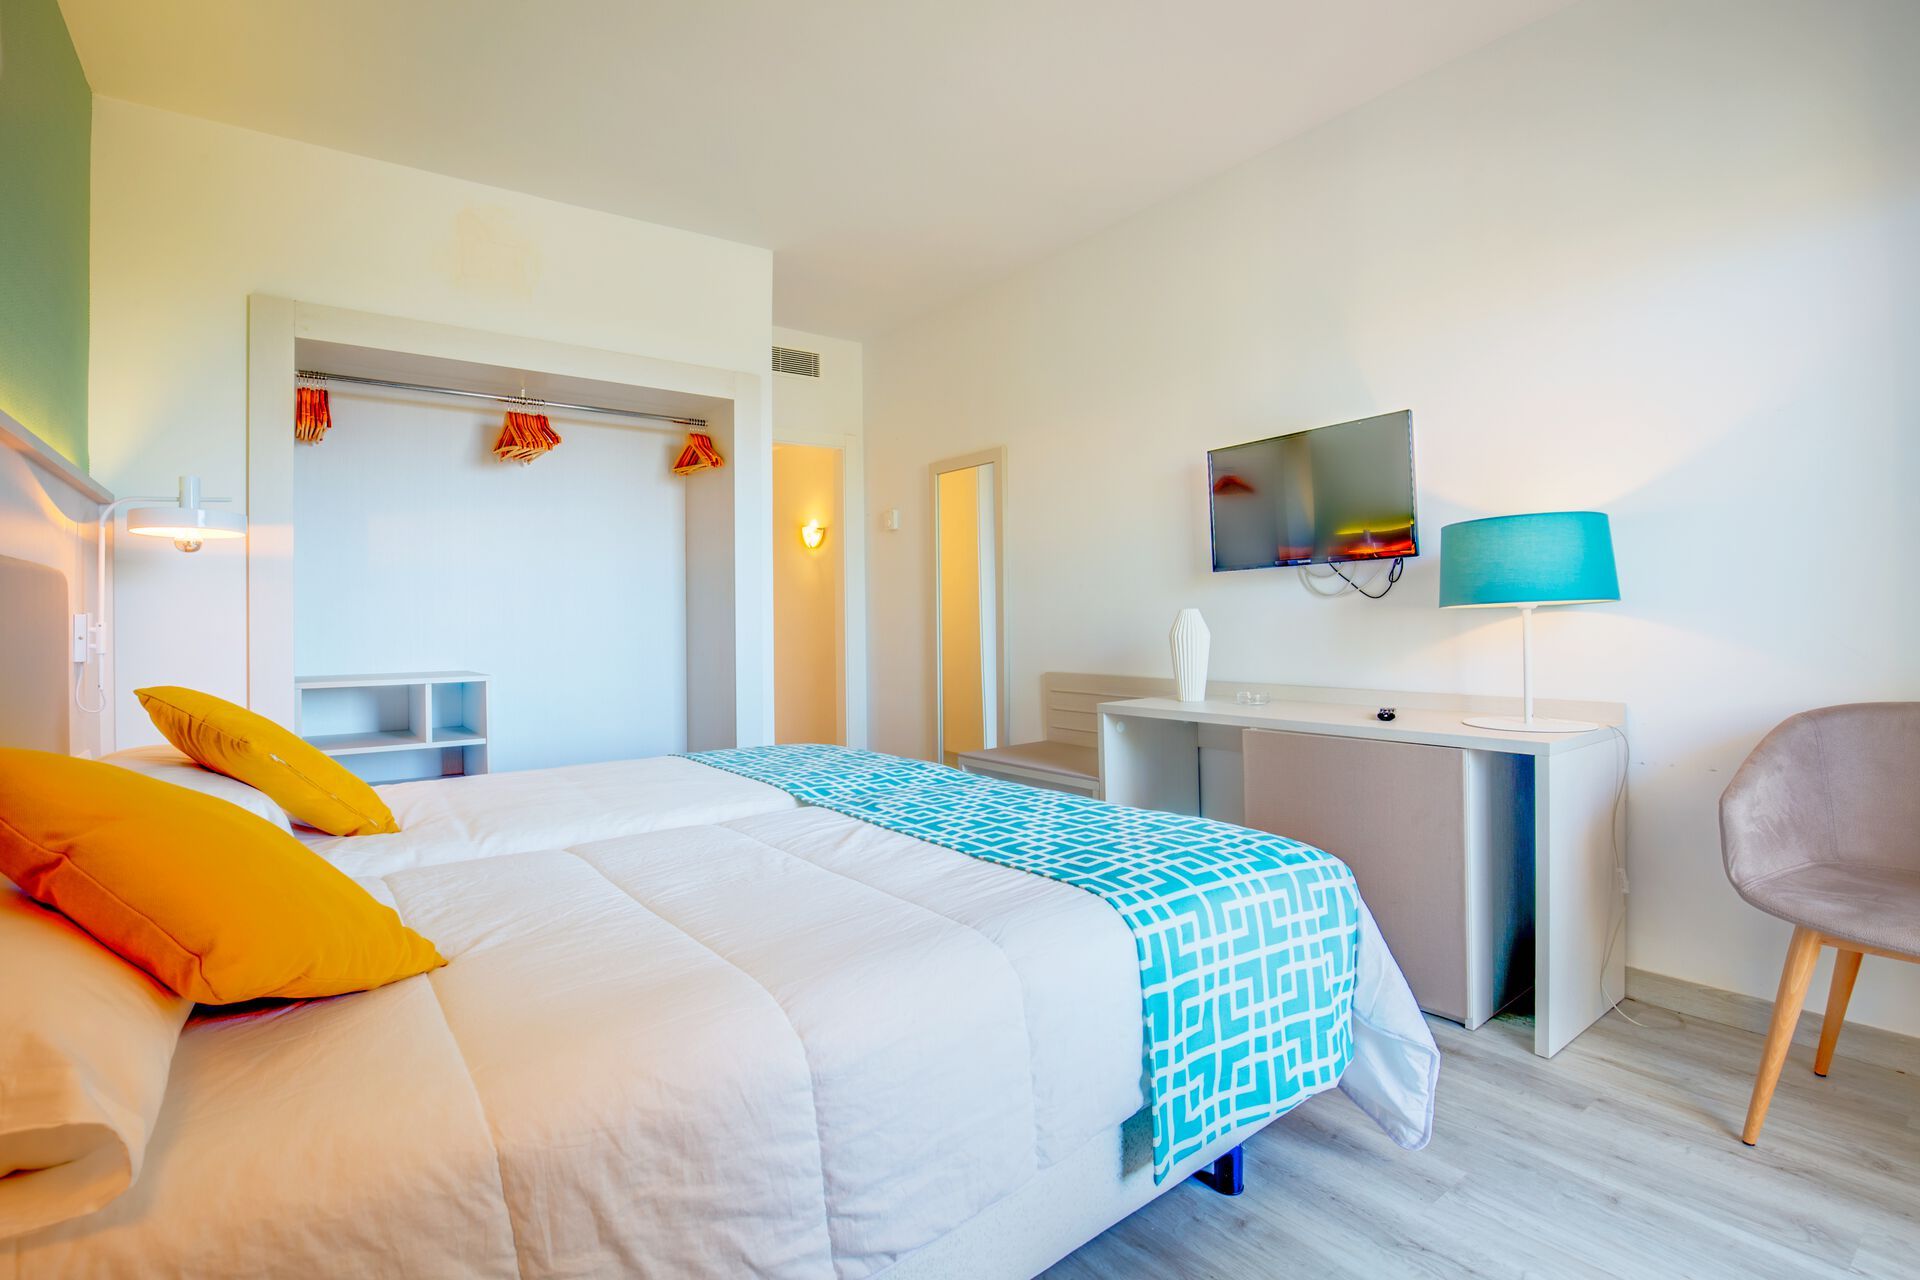 Canaries - Fuerteventura - Espagne - Hotel SBH Maxorata Resort 4*